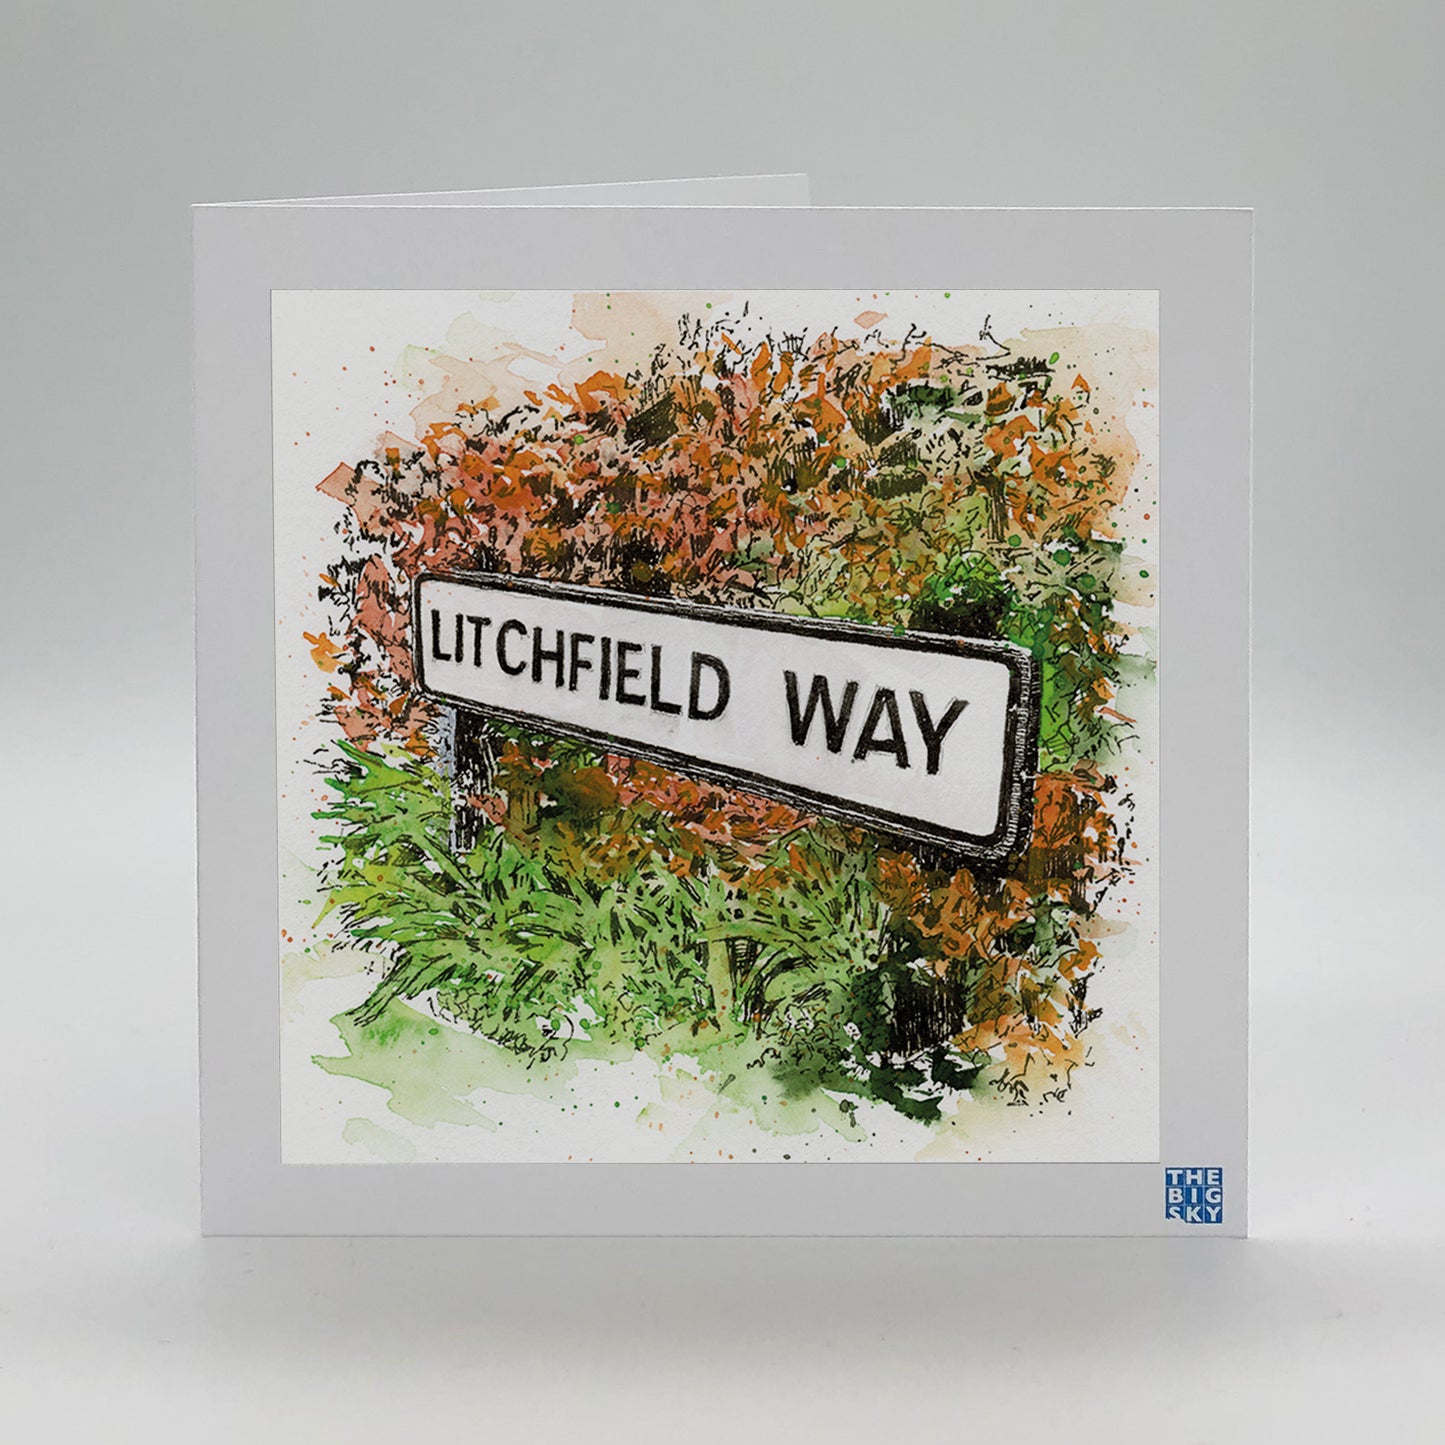 1024: 'Litchfield Way' greetings card